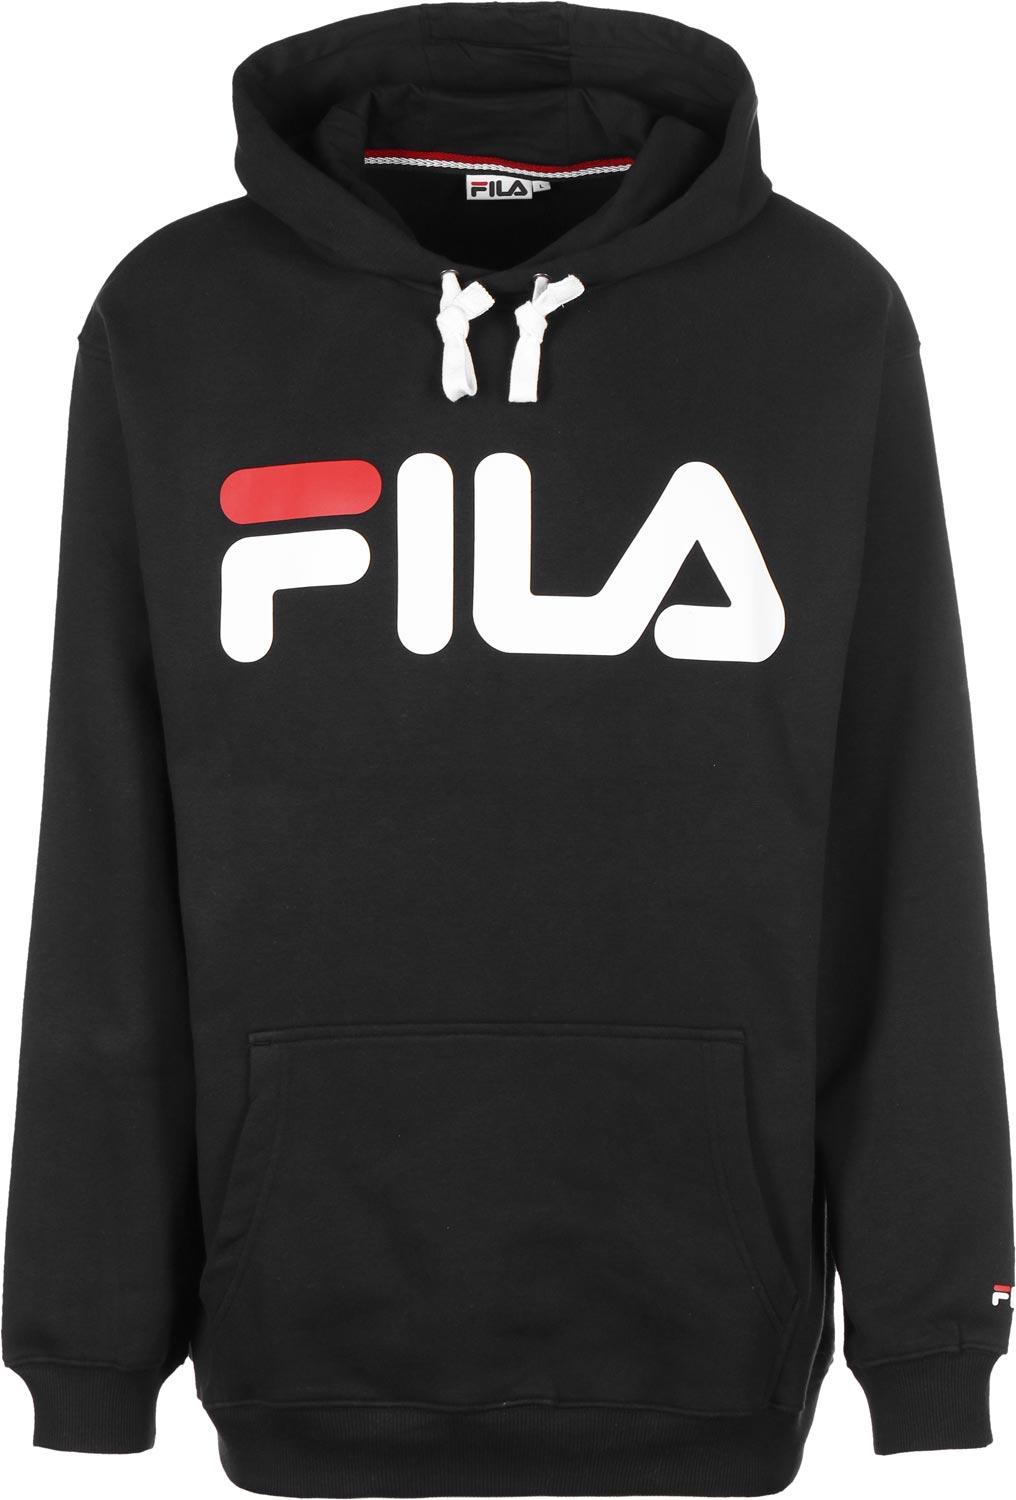 Old Fila Logo - Fila Classic Logo Kangaroo hoodie black